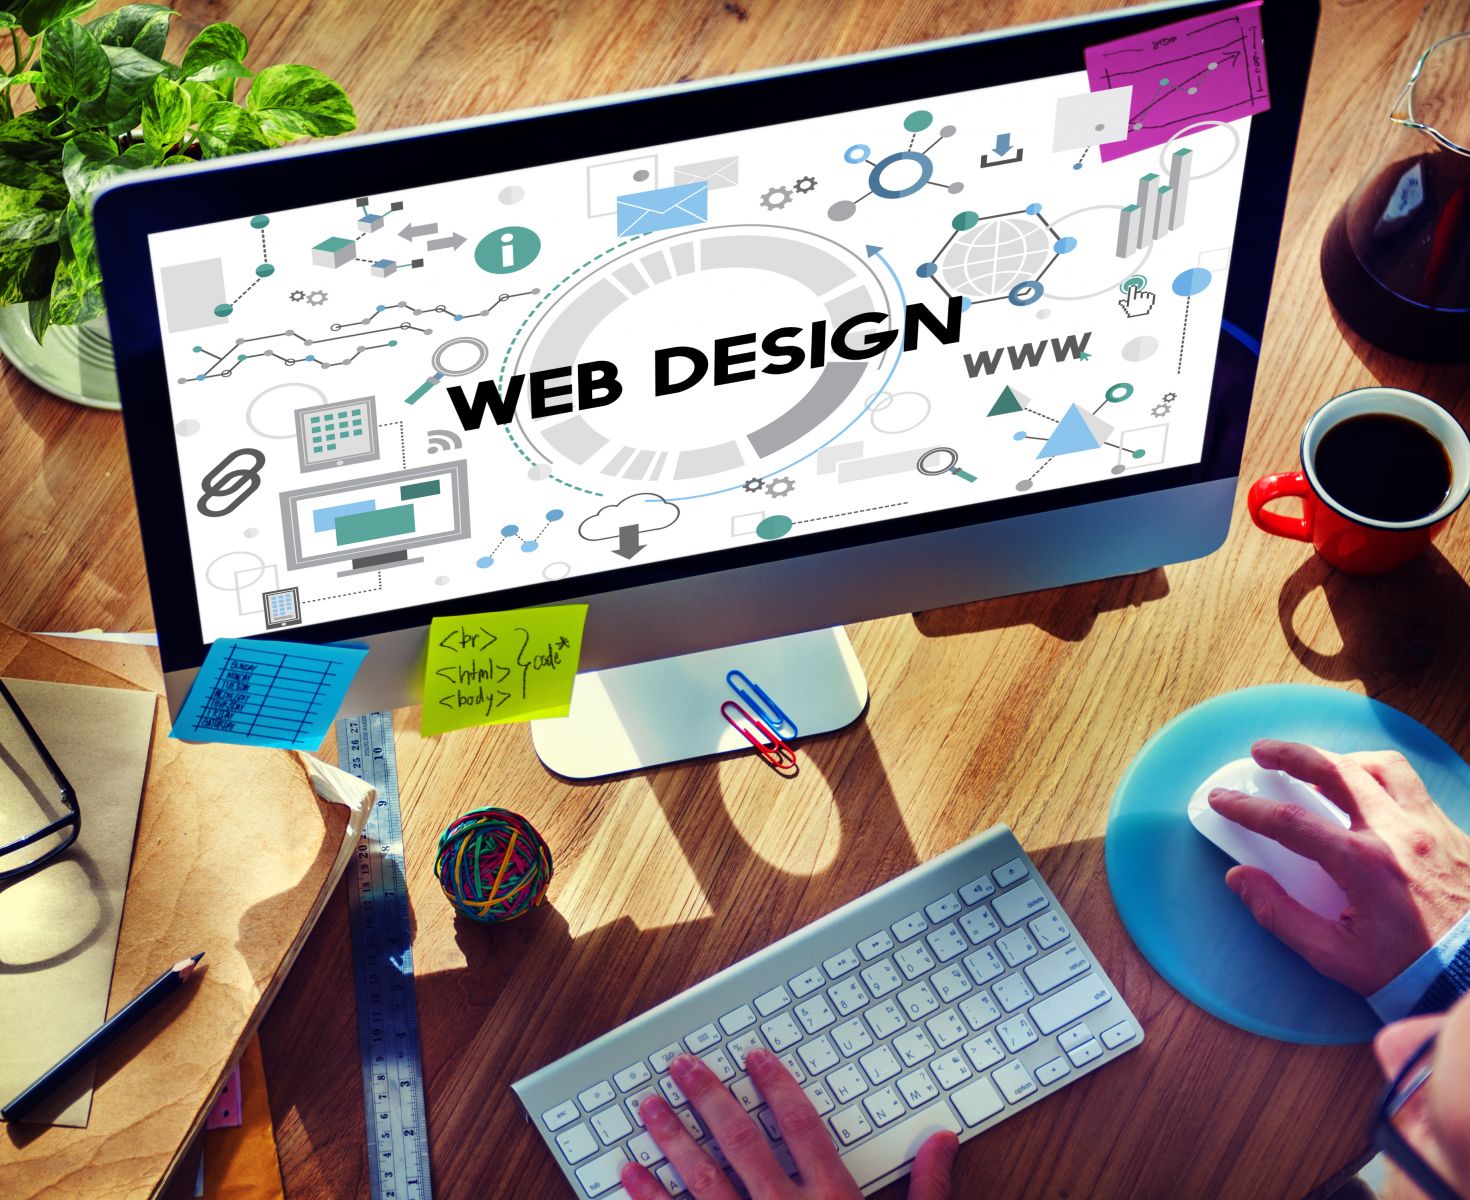 Web design presentation on a laptop